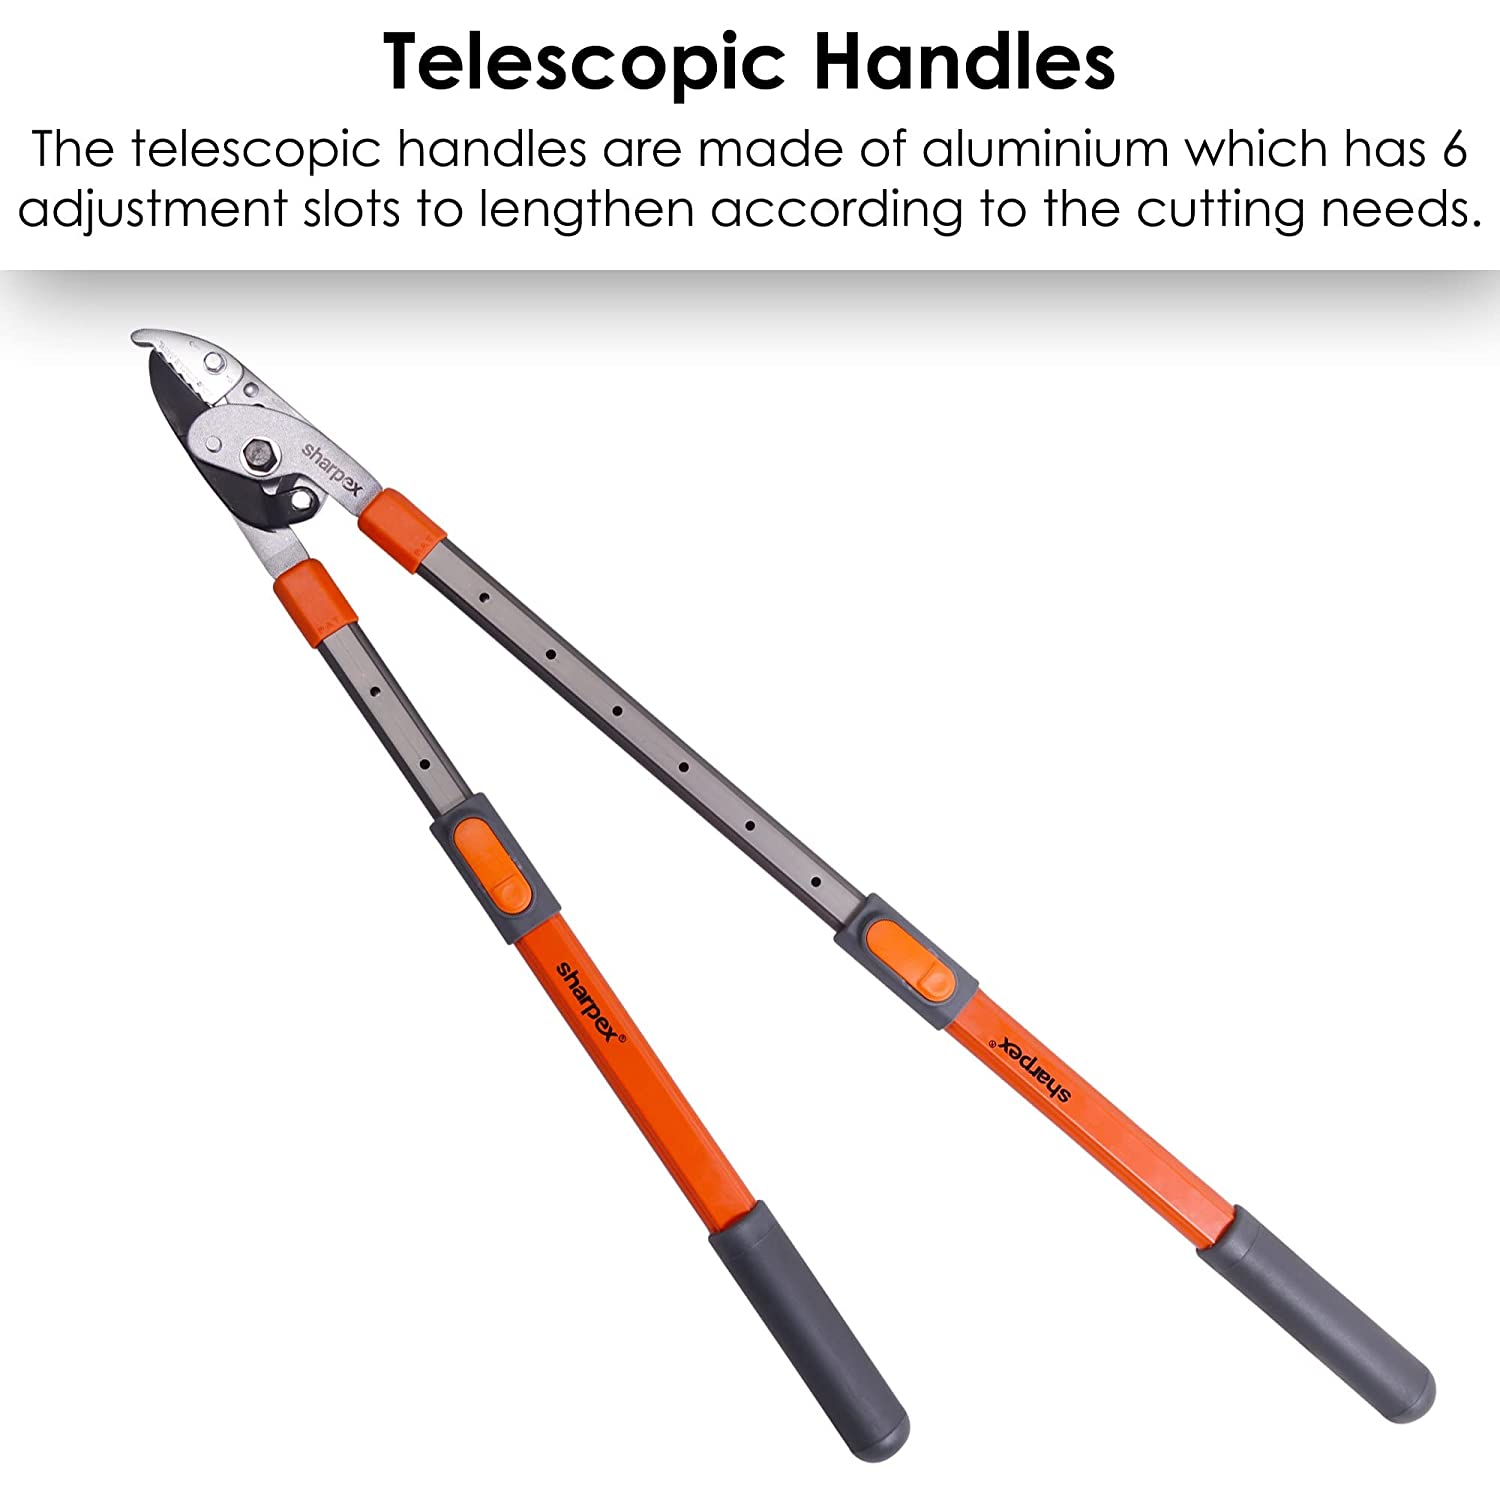 sharpex razor sharp carbon steel blade anvil lopper with telescopic handle, 2 inch cutting capacity, professional garden lopper pruning tool (orange)